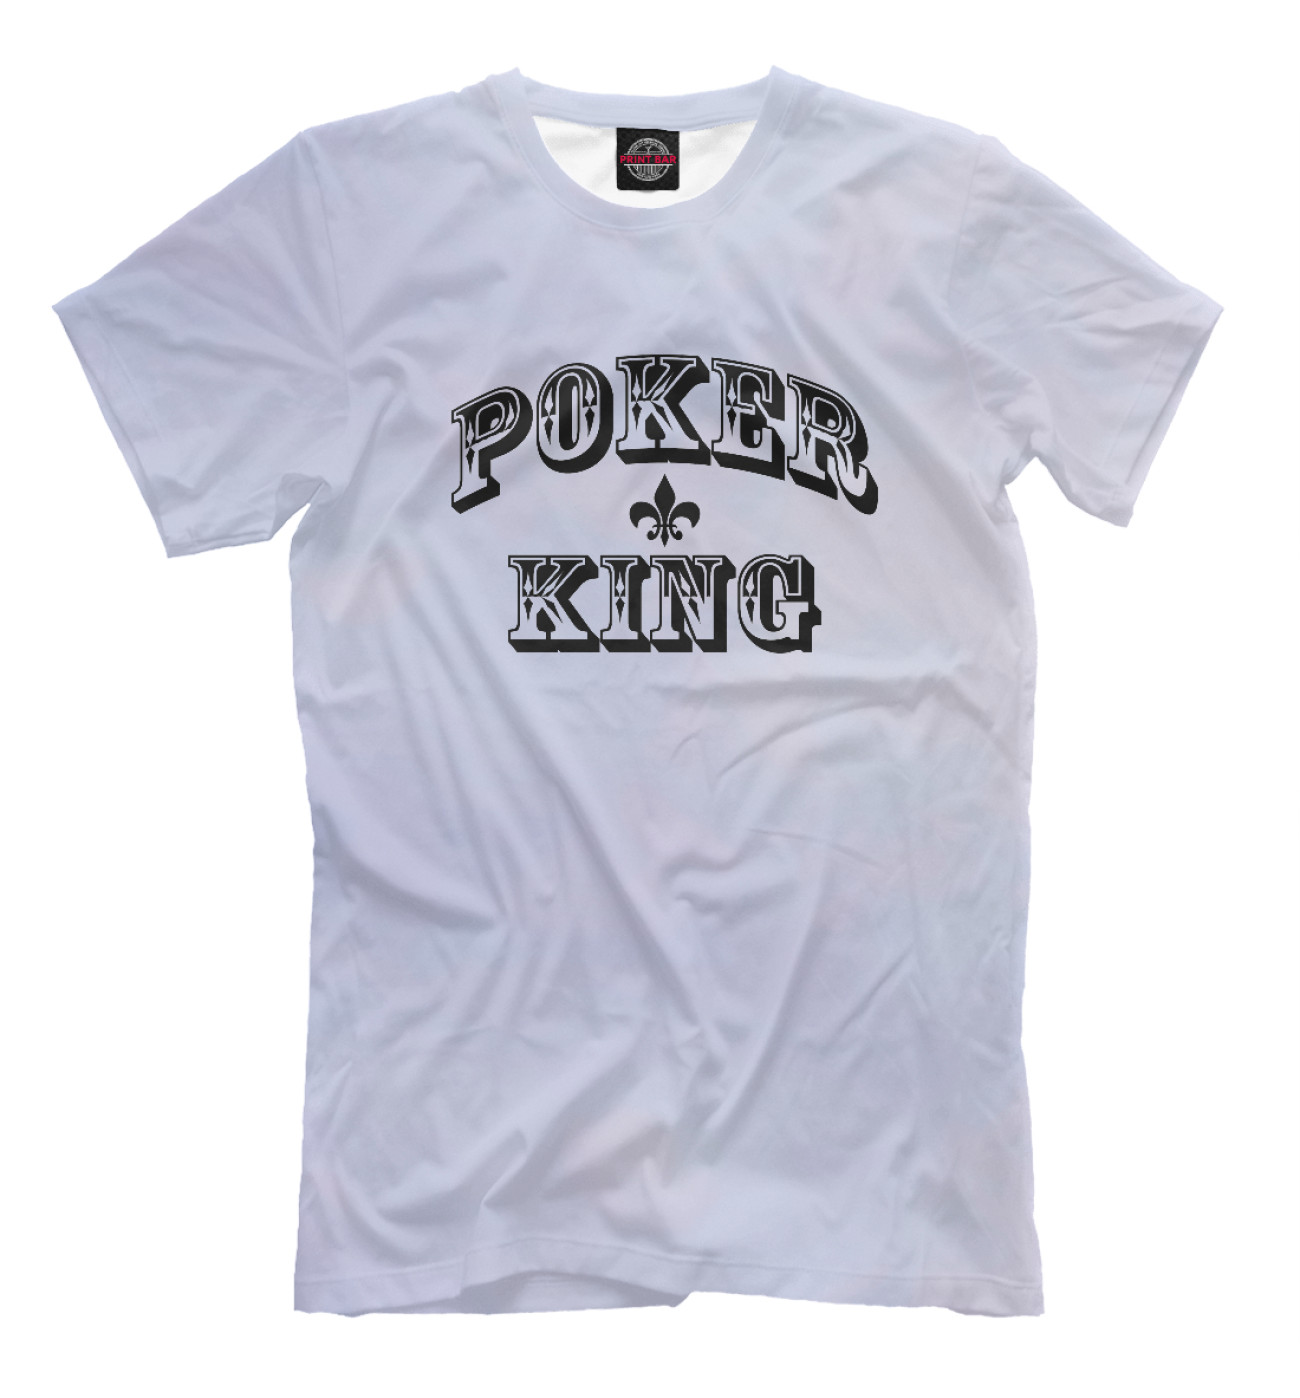 Мужская Футболка Poker King, артикул: POK-429588-fut-2